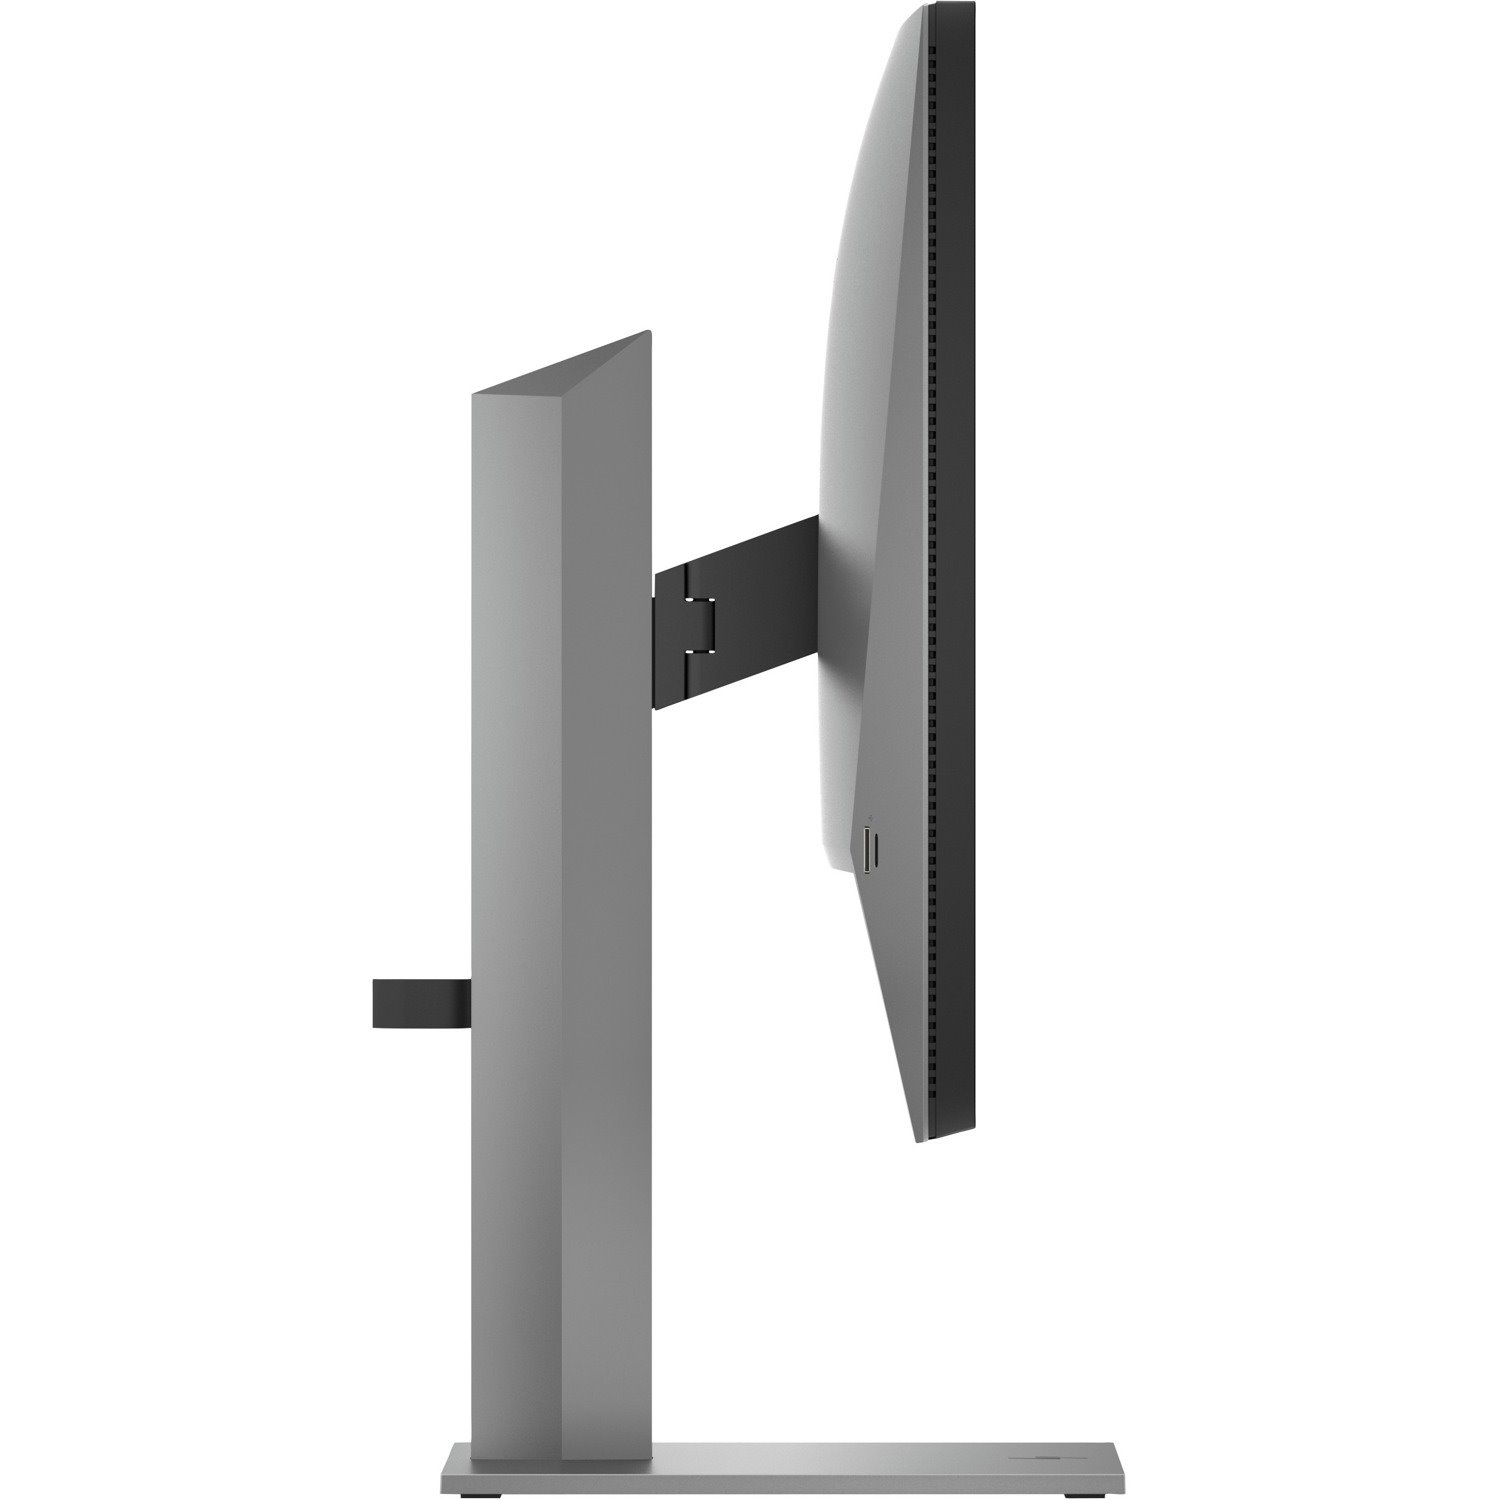 HP DreamColor Z25xs G3 63.5 cm (25") WQHD Edge LED LCD Monitor - 16:9 - Turbo Silver